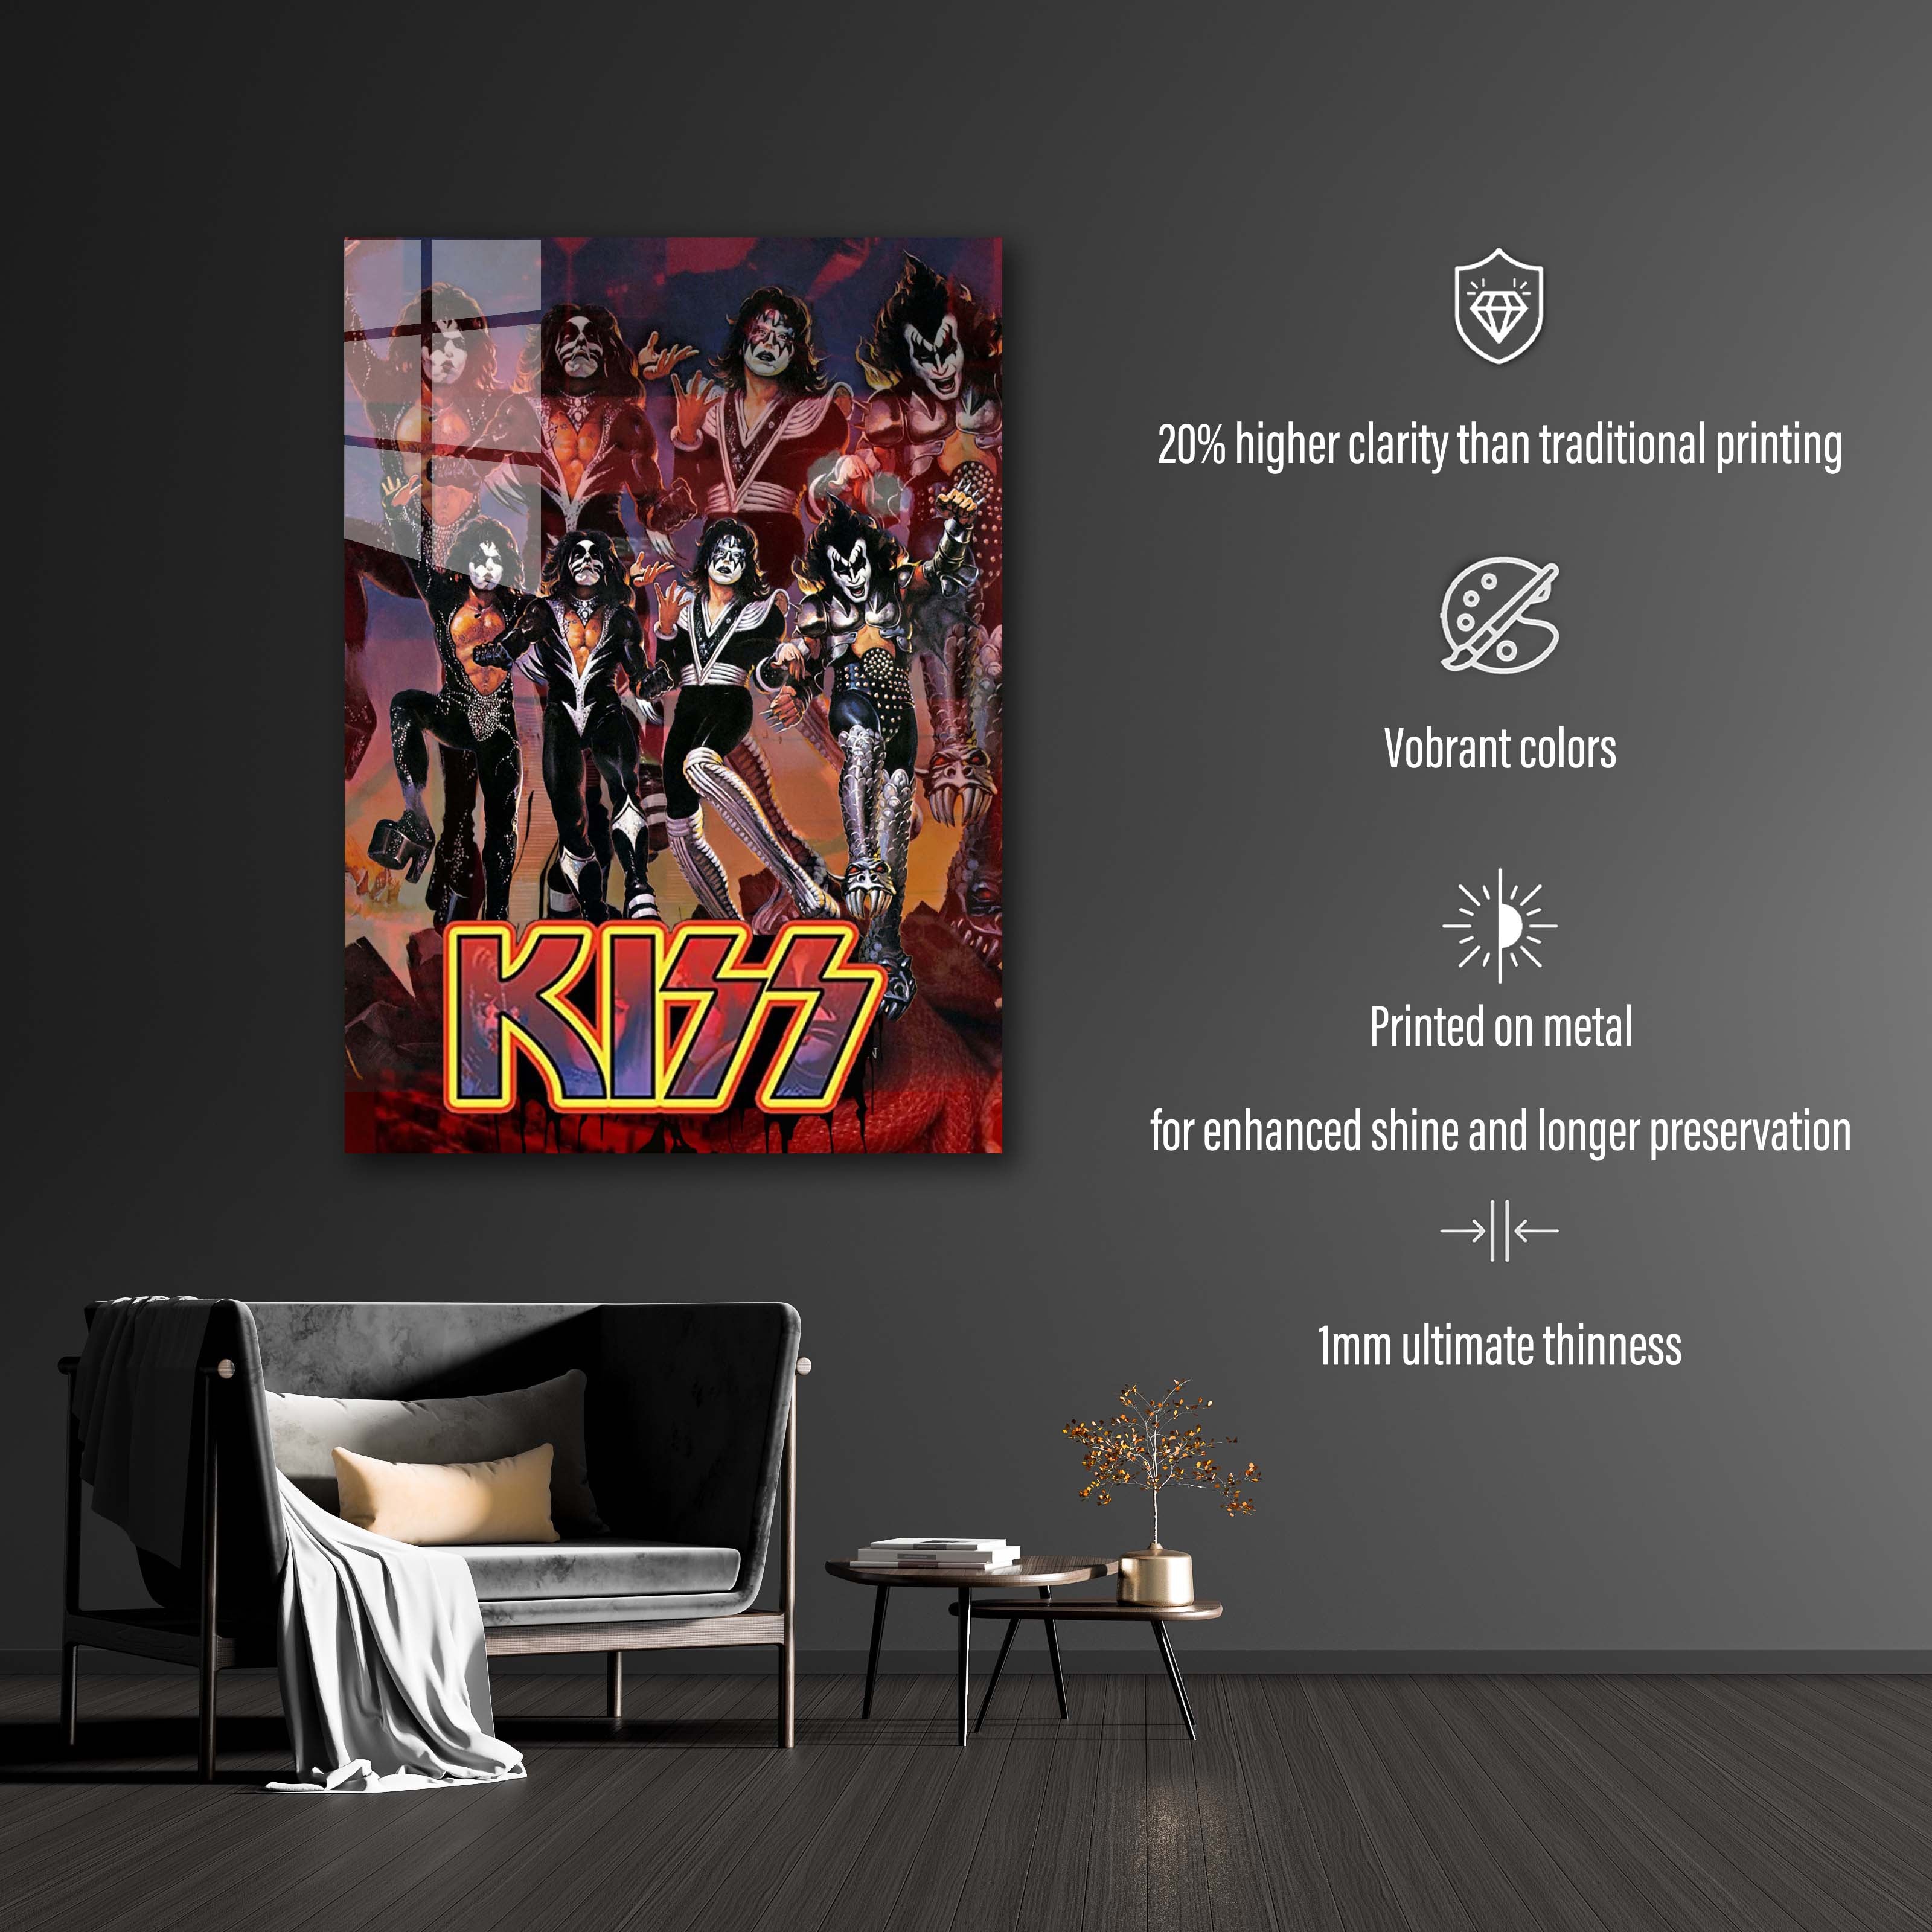 KISS-designed by @rizal.az